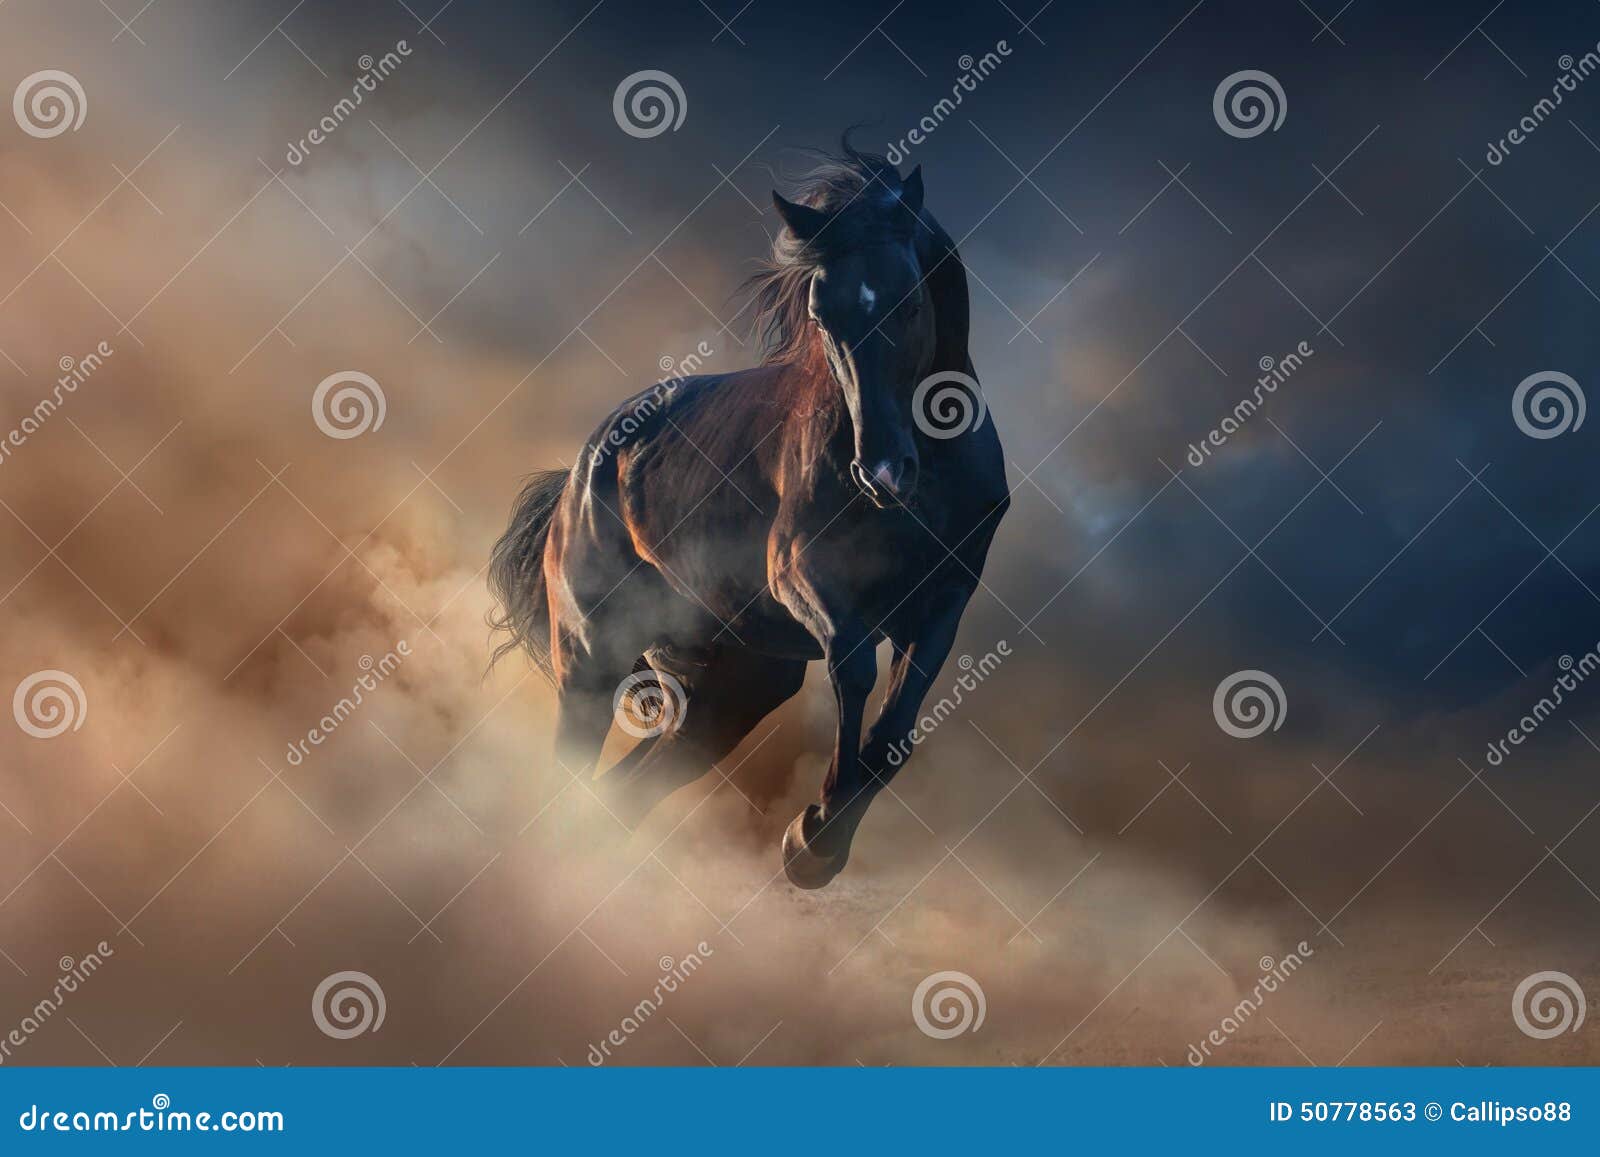 black stallion horse